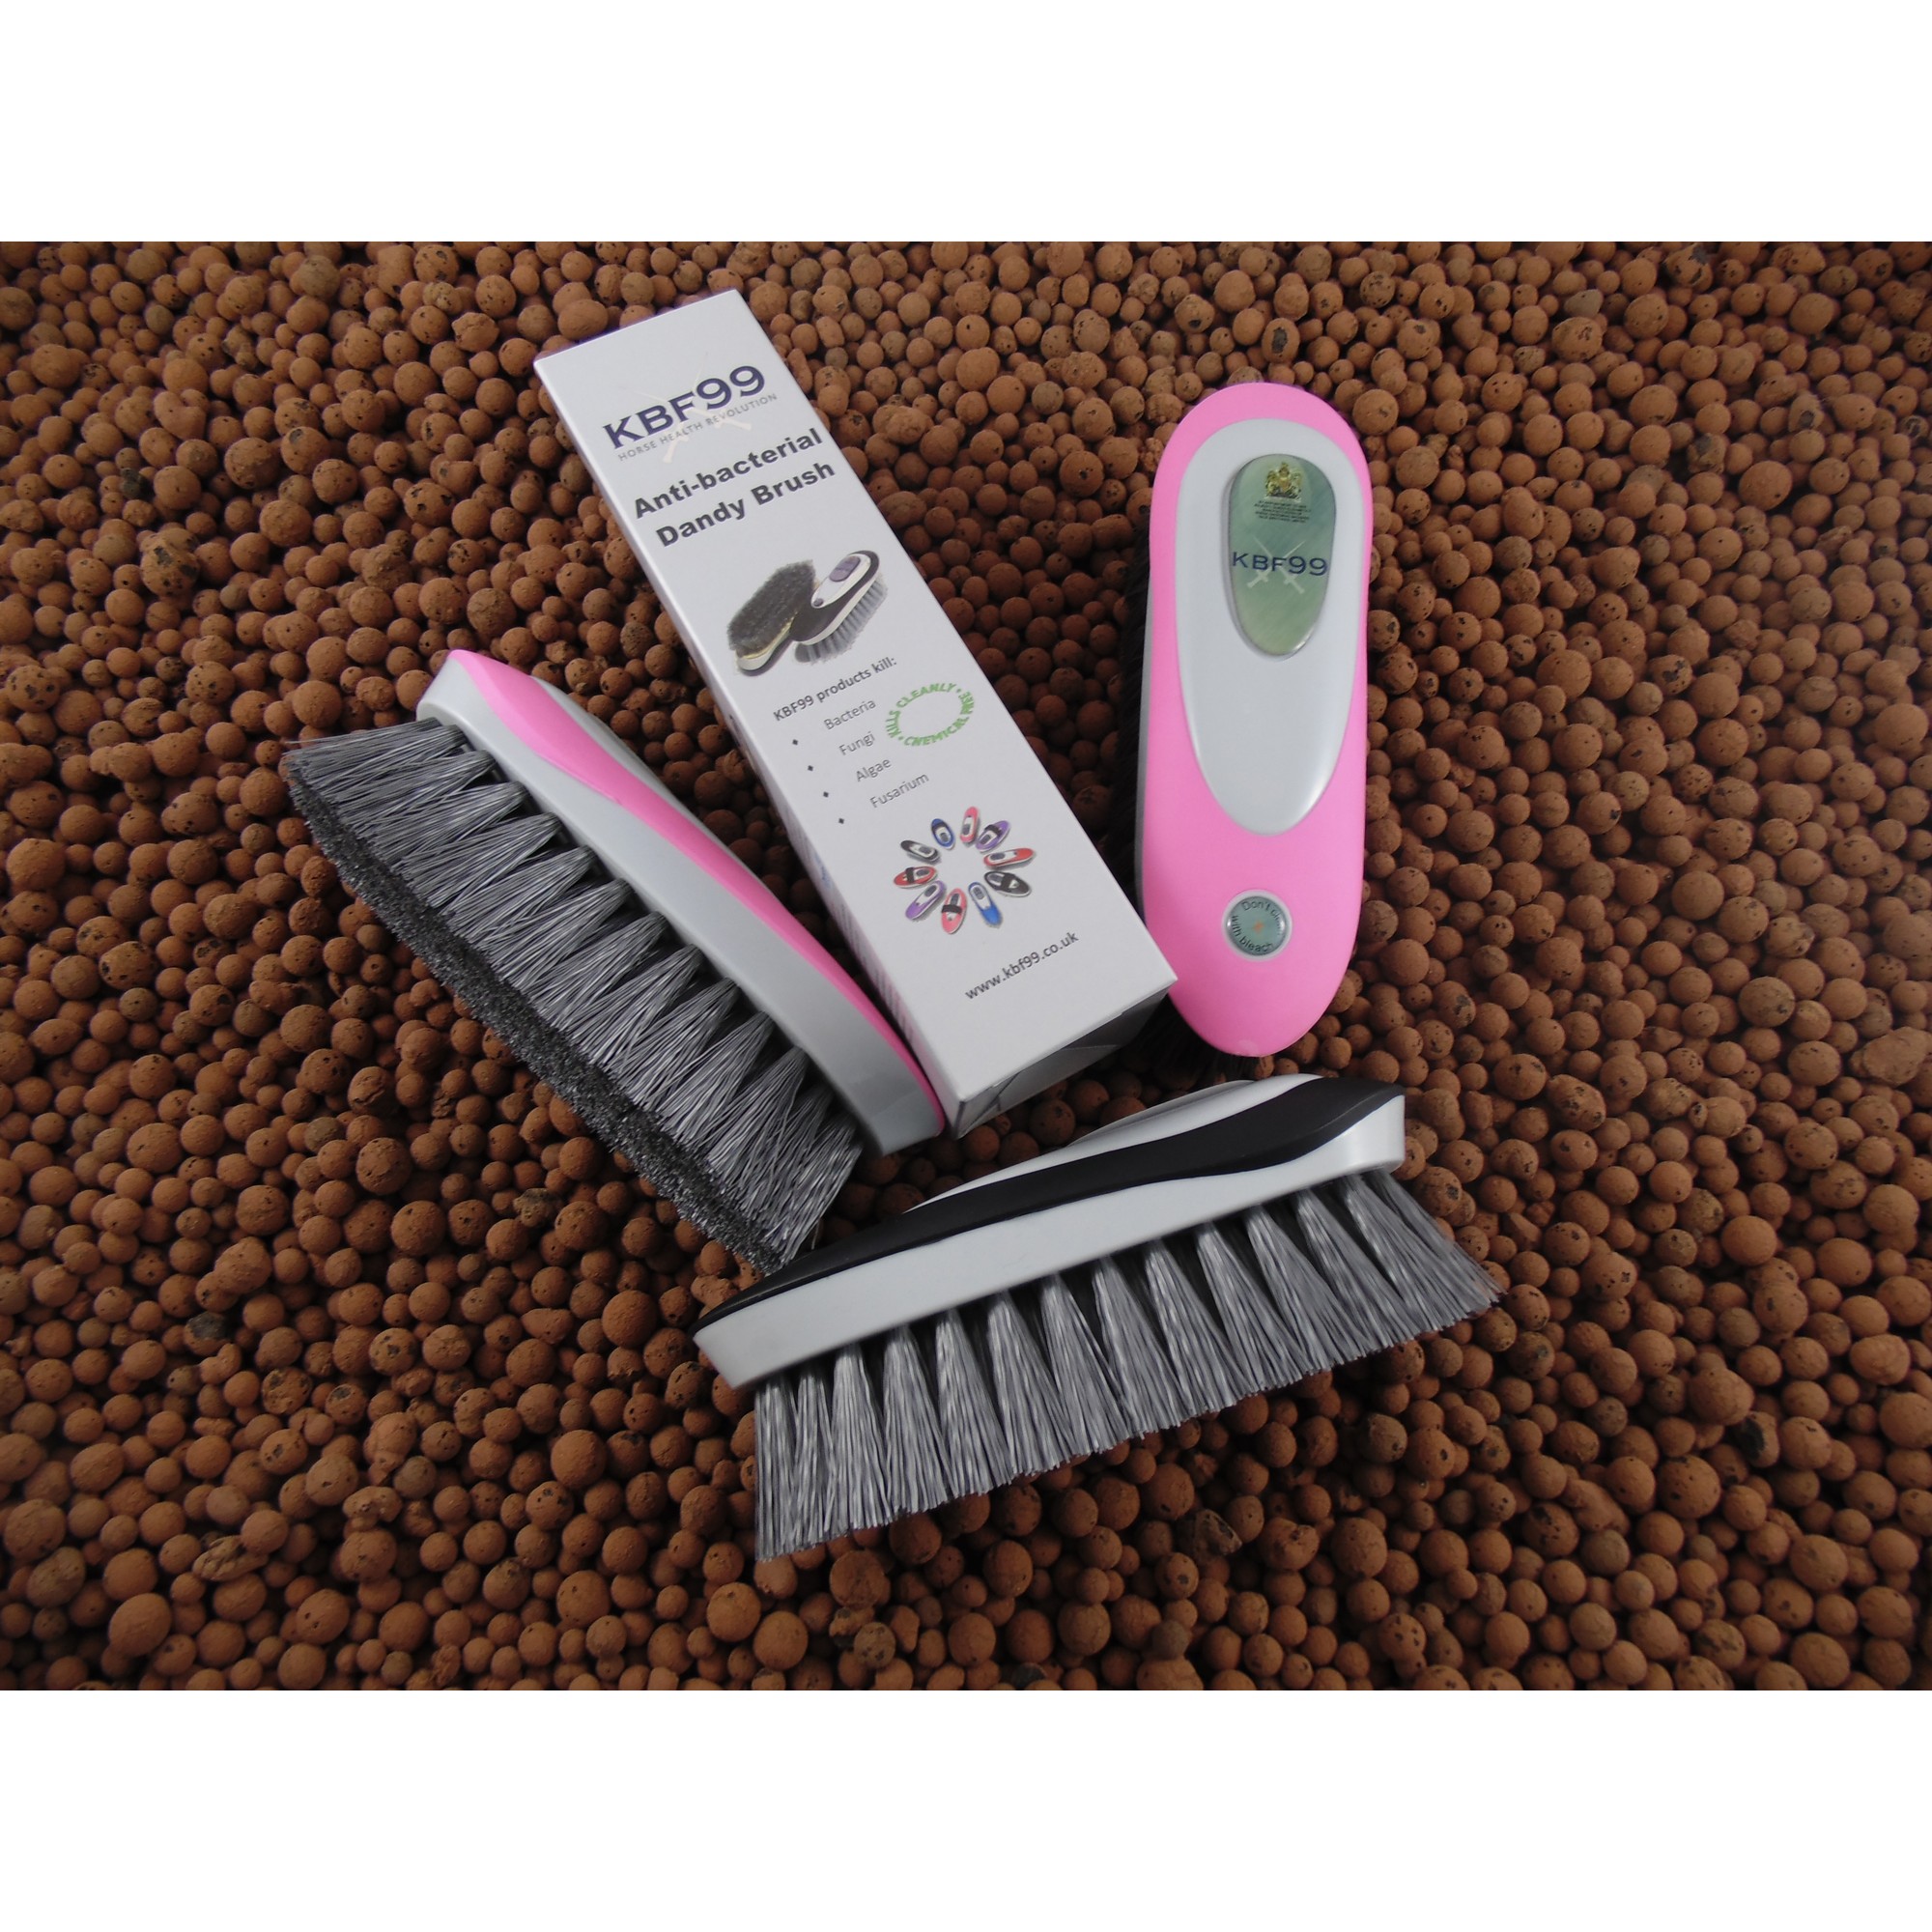 KBF99 Dandy Brush (short bristles), pink